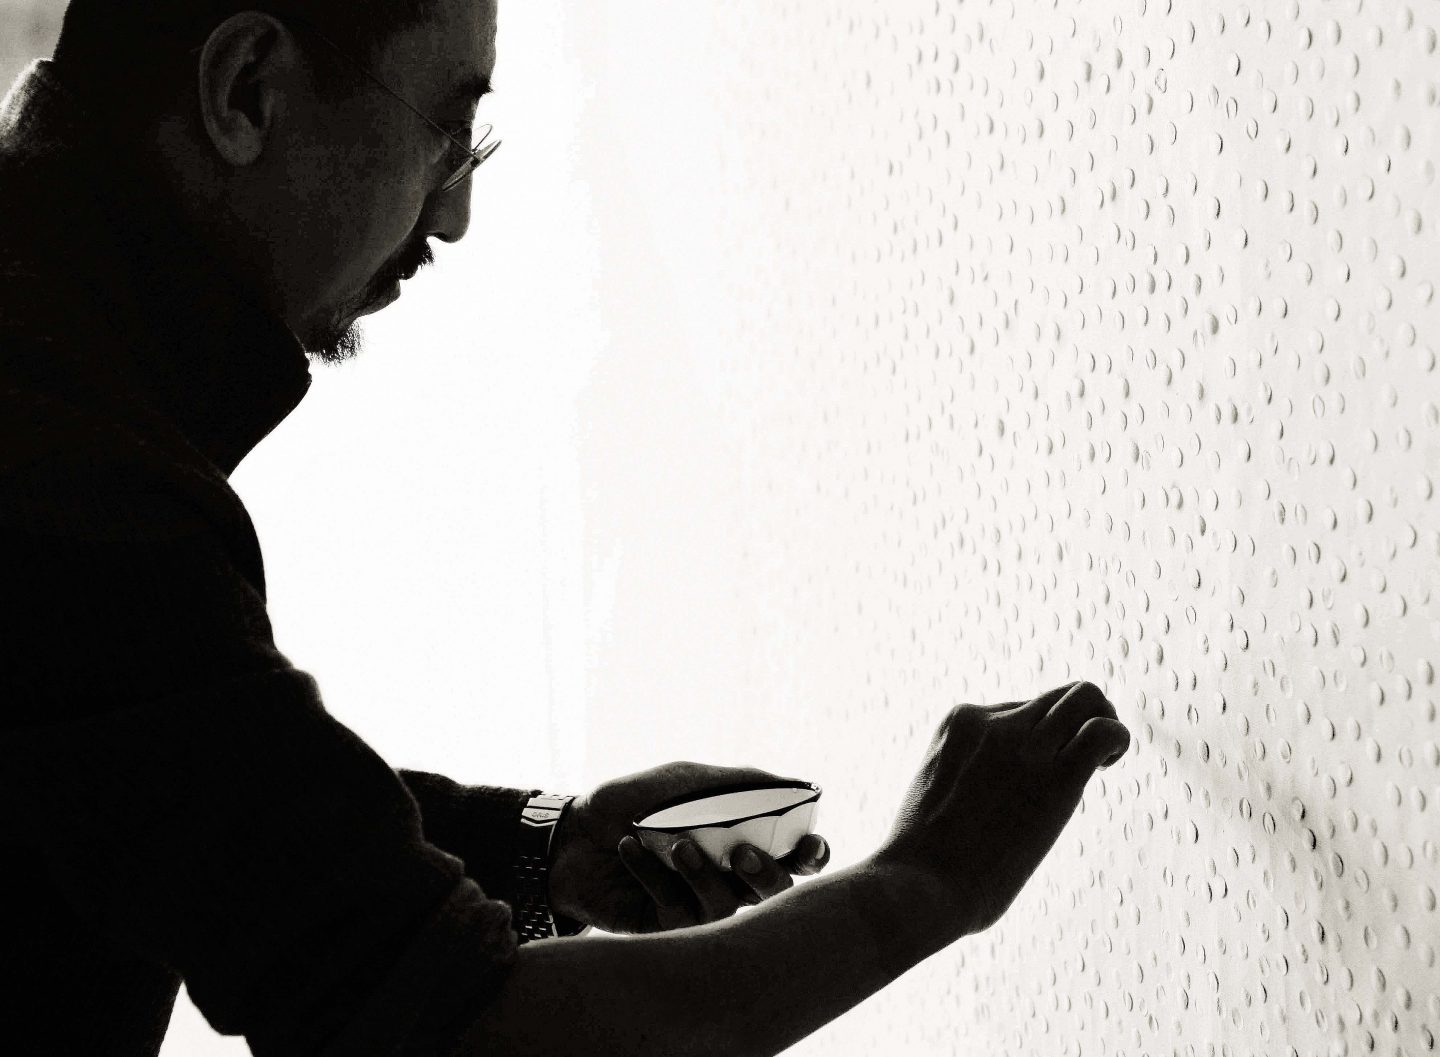 Zhang Yu making a Fingerprints work in Beijing, 2007. Photo courtesy of the artist.